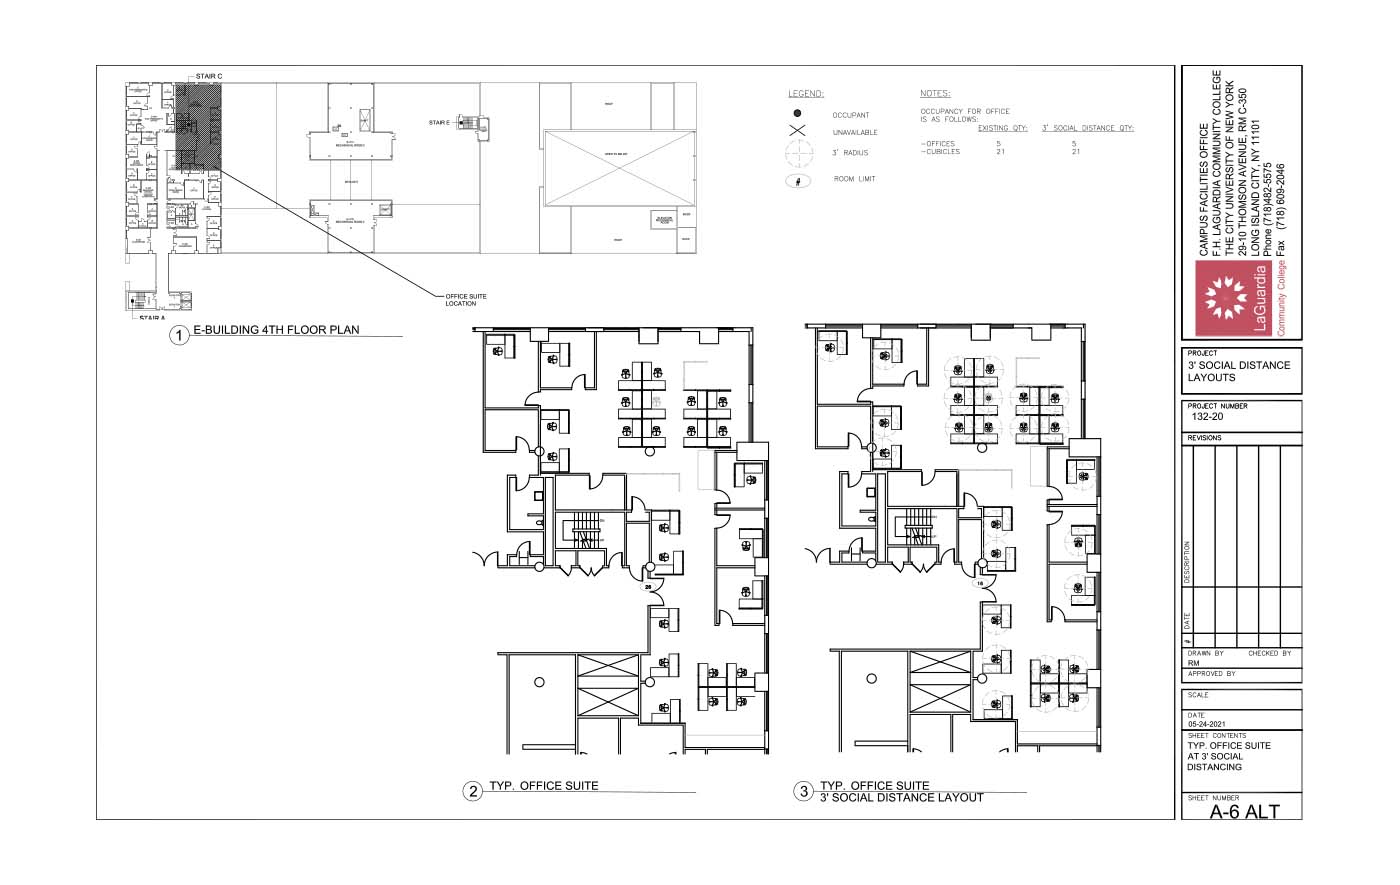 LaGuardia's campus facilities_E-building_center III 3rd floor plan